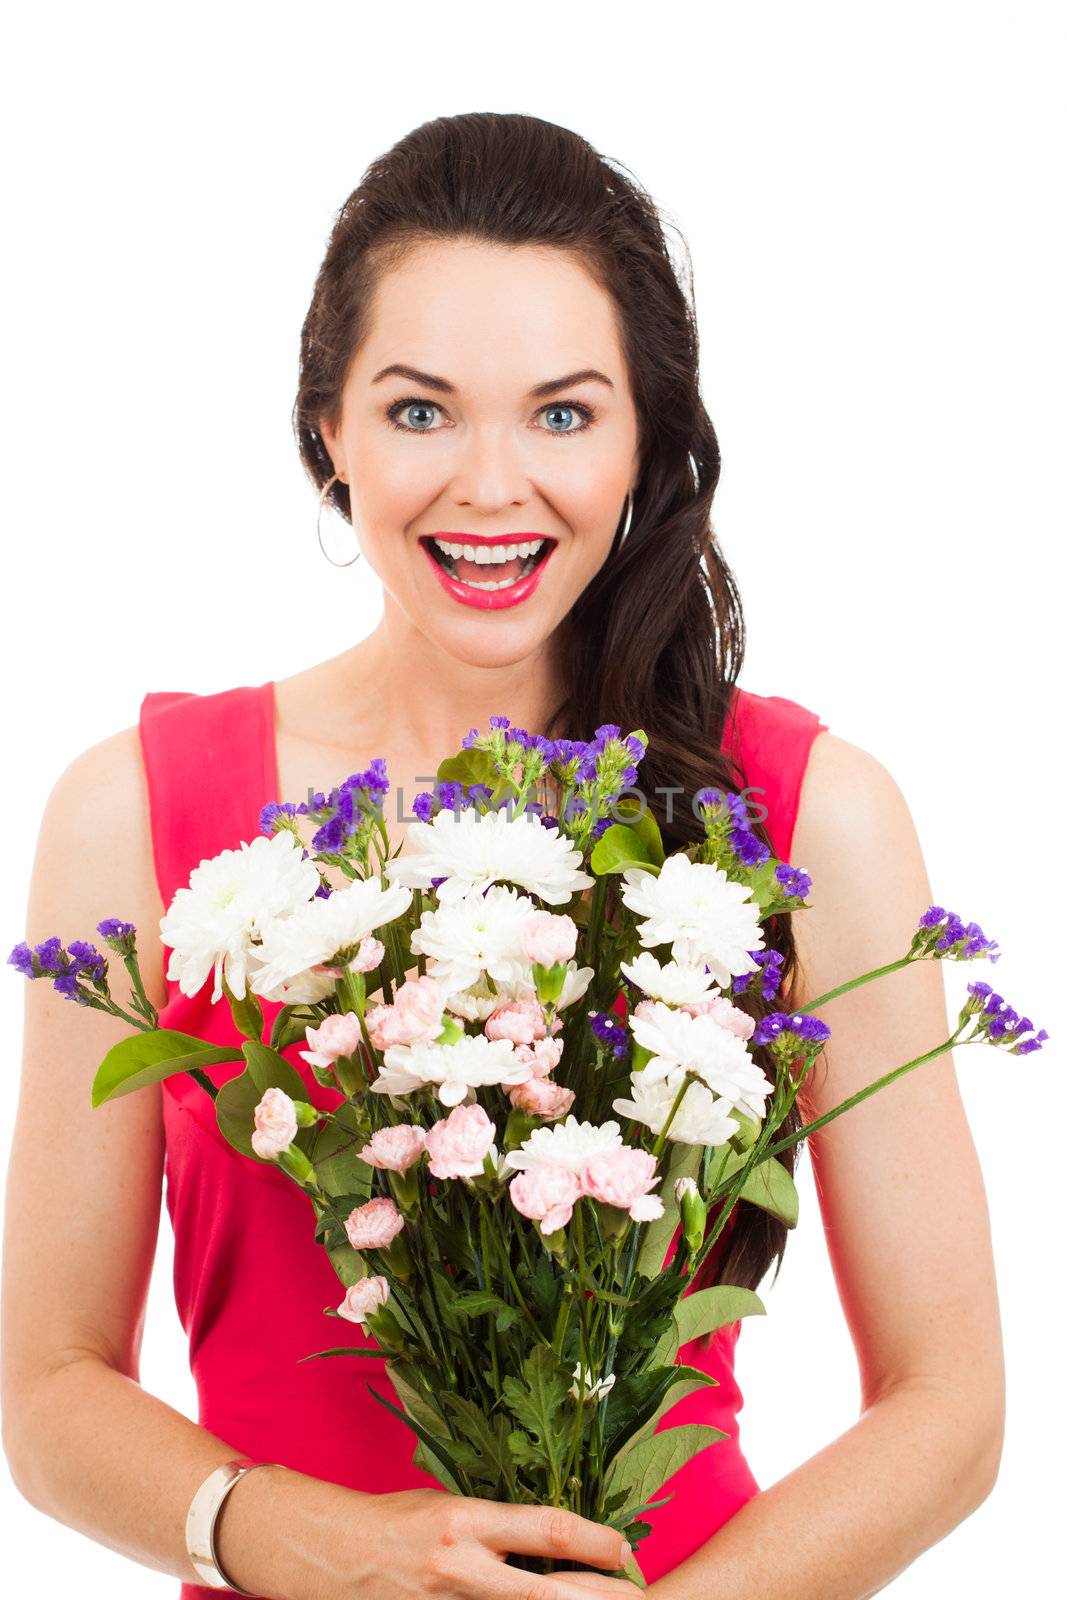 Surprised woman holding flowers by Jaykayl